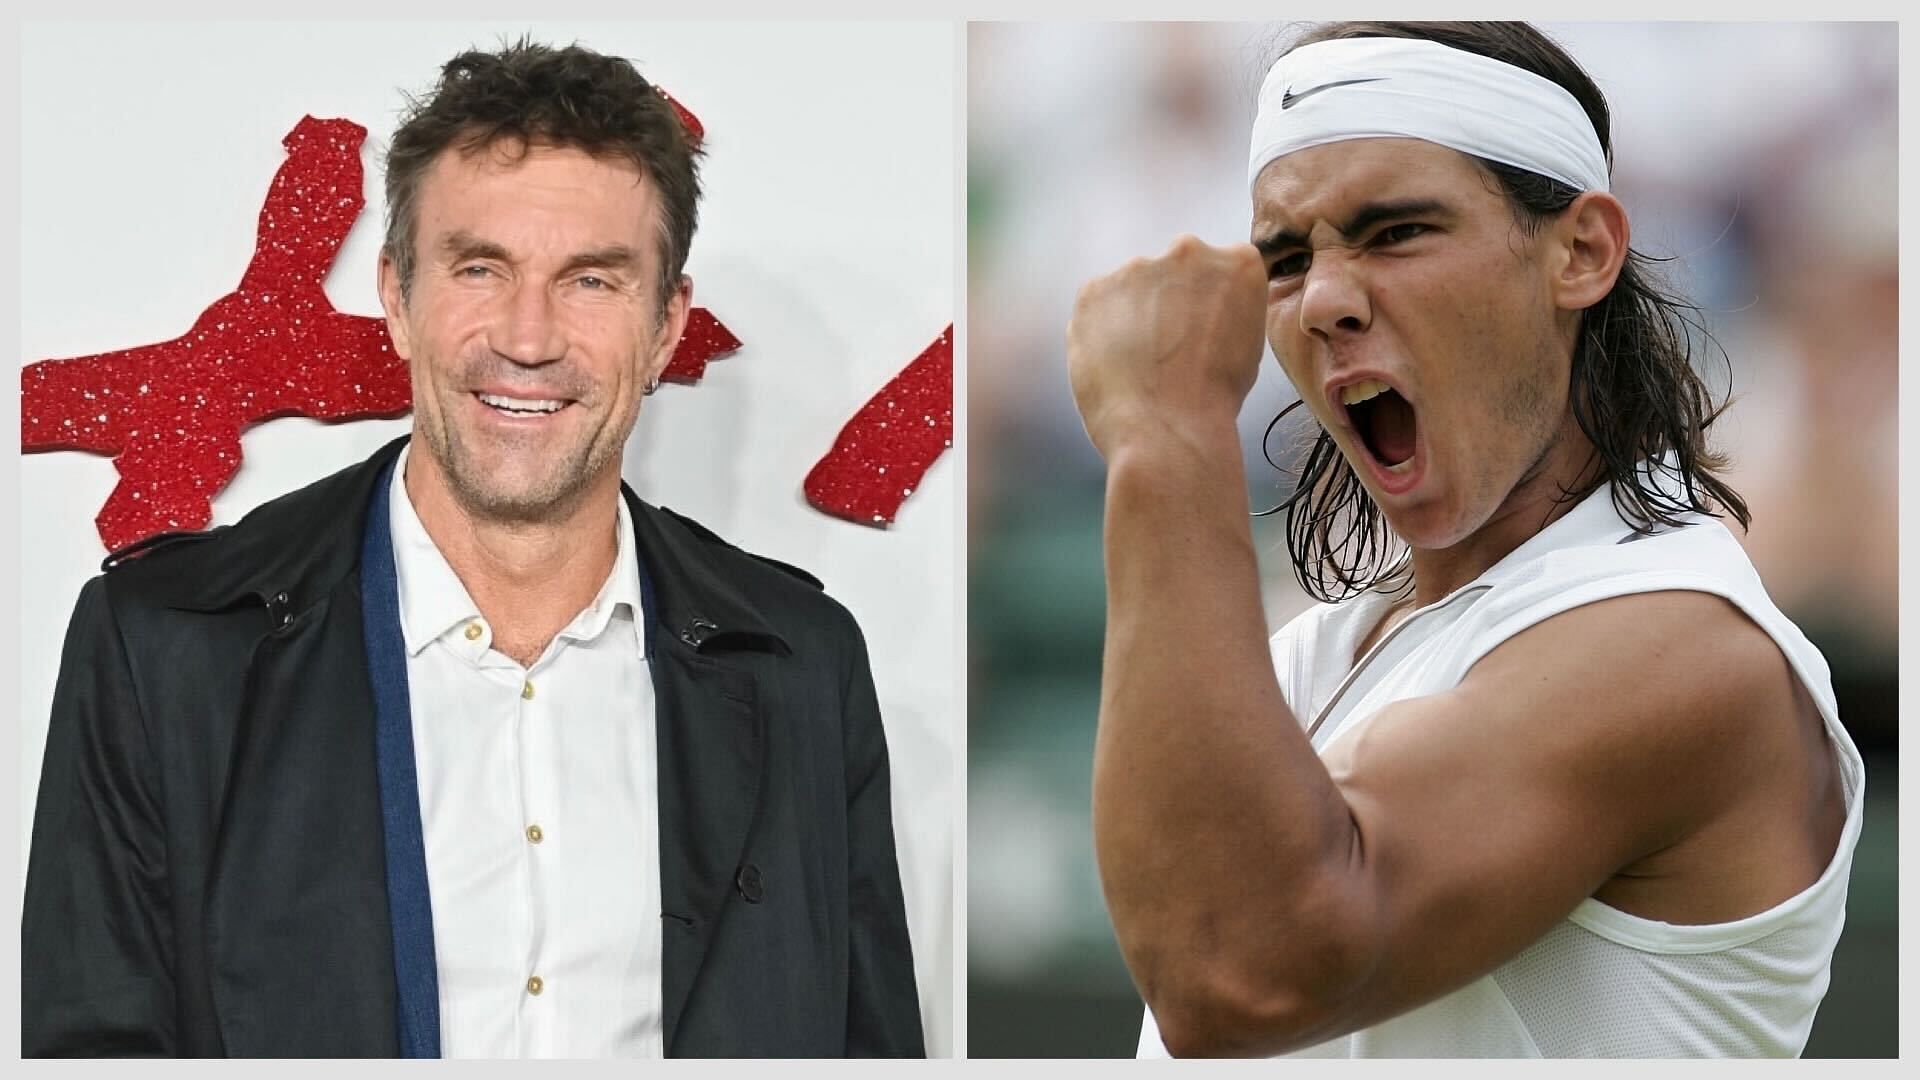 Pat Cash revisits 14-year-old Rafael Nadal beating him